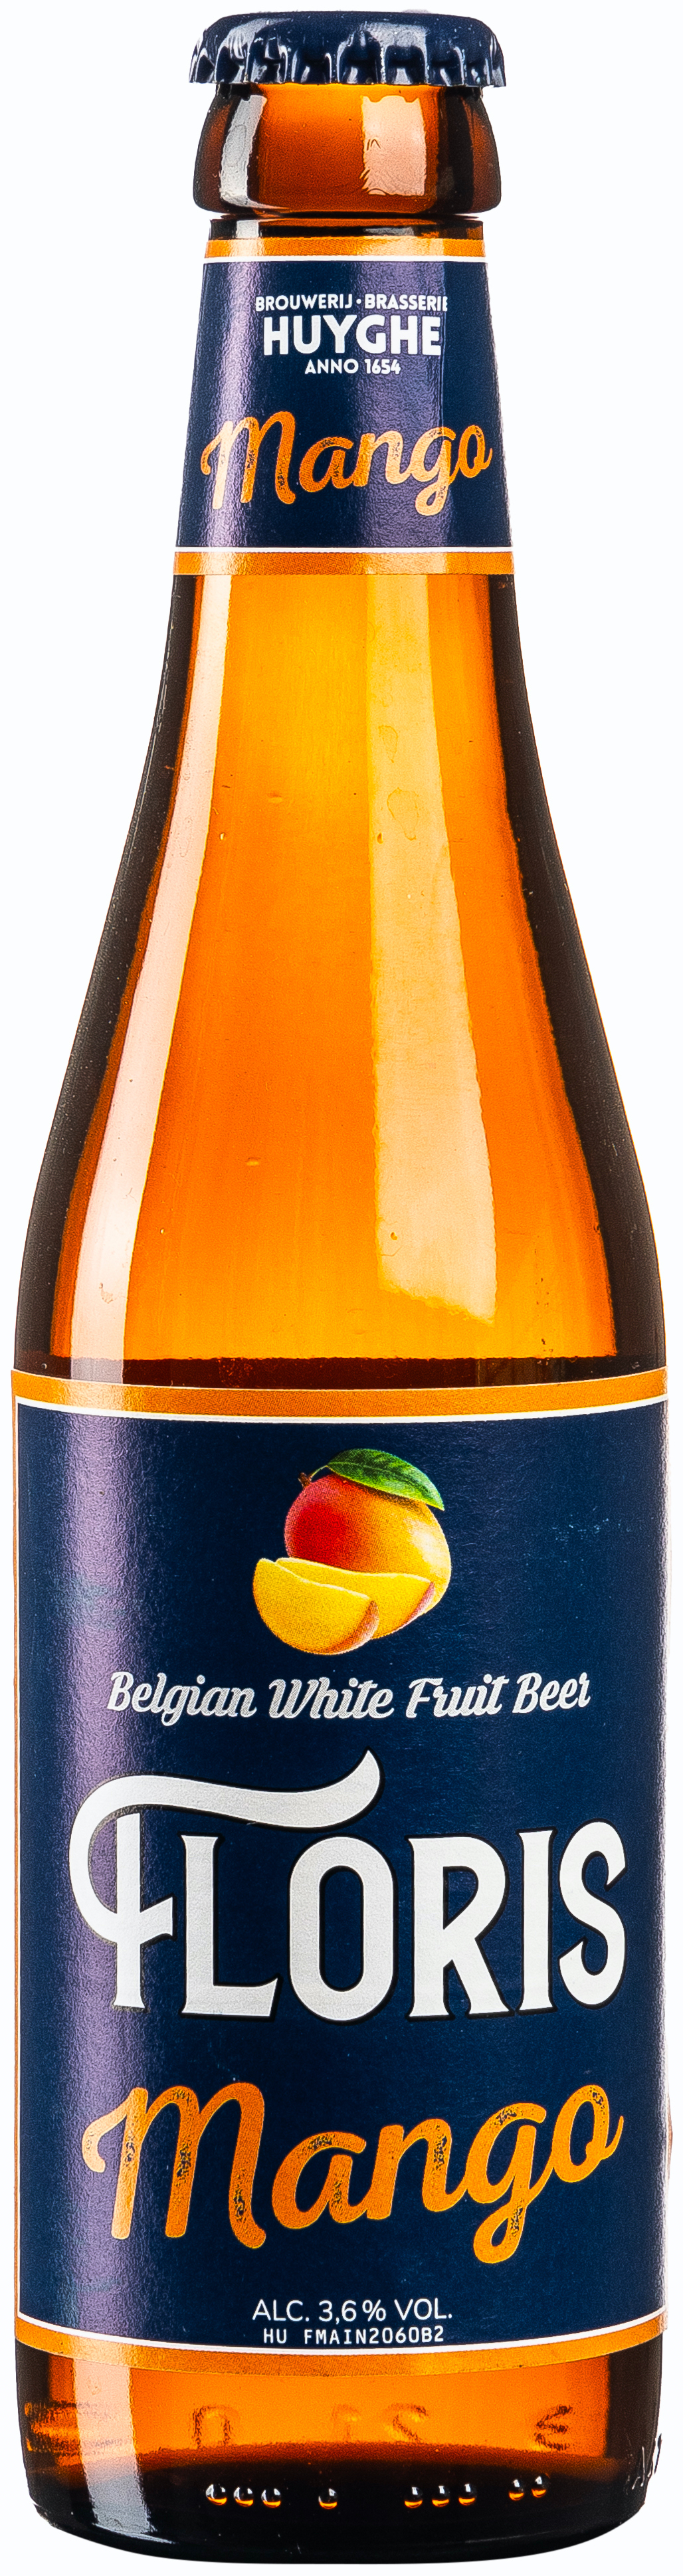 Floris Mango Belgian White Fruit Beer 0,33L MEHRWEG 